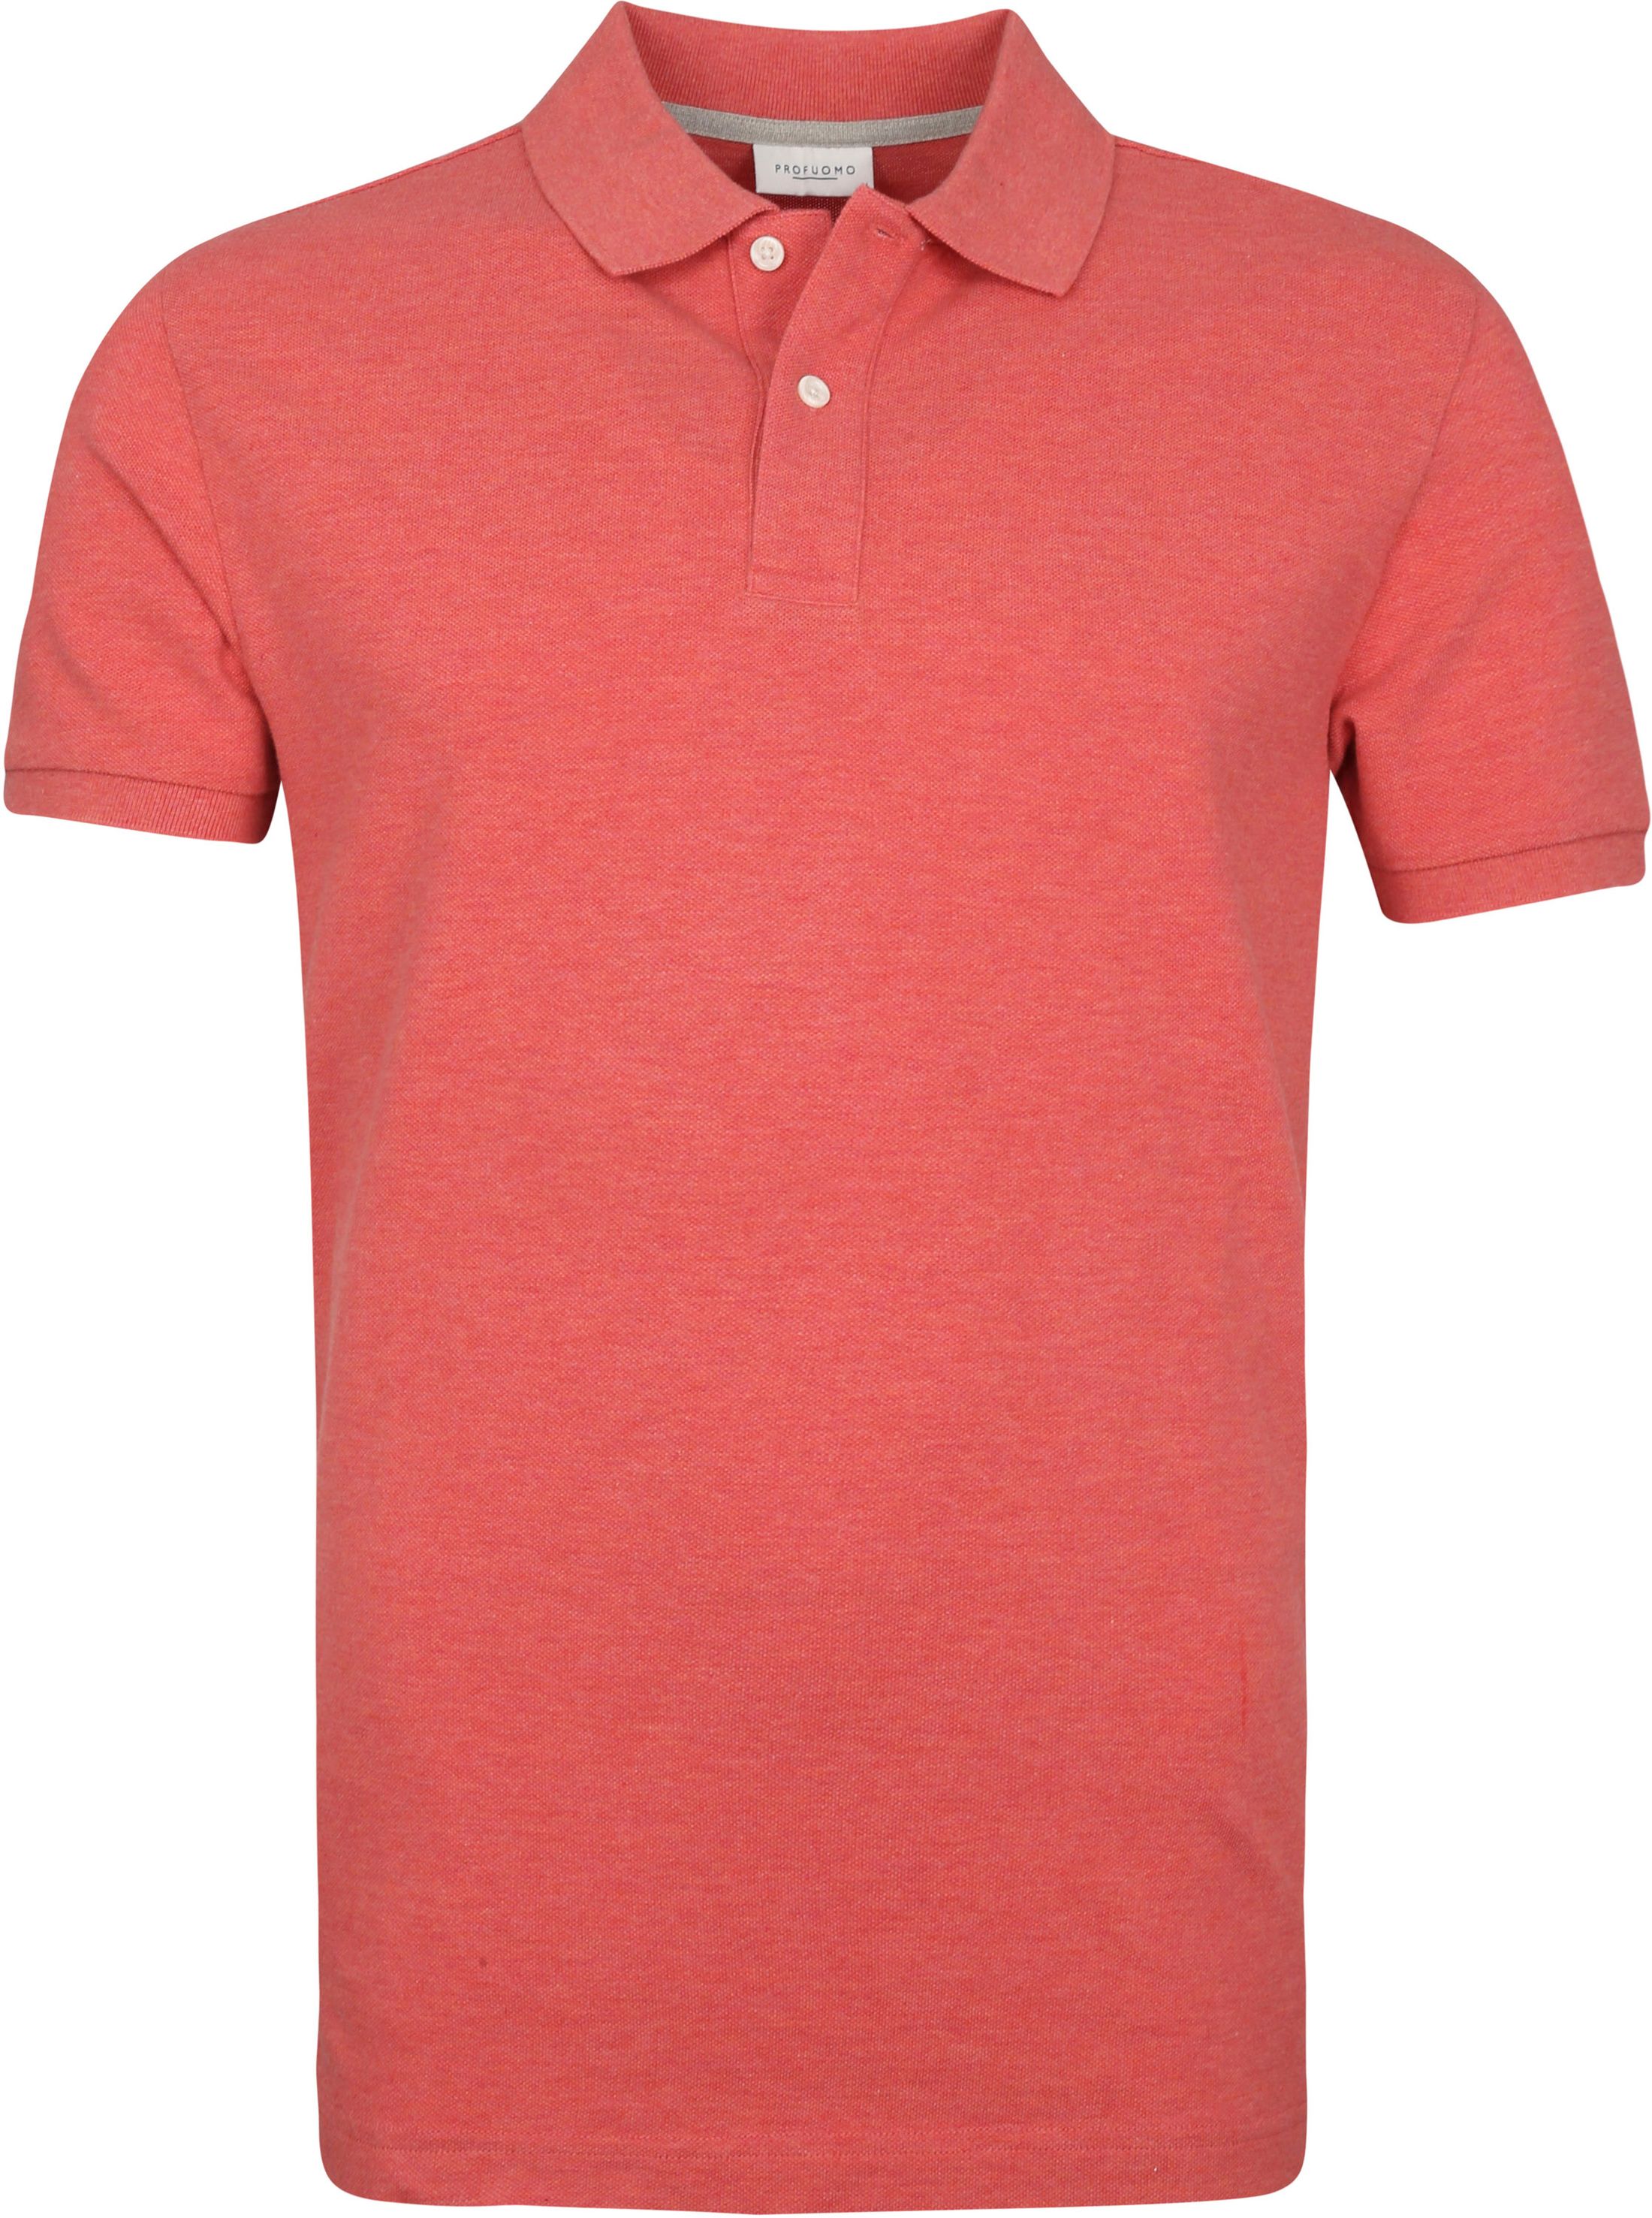 Profuomo Pique Polo Shirt Red size L